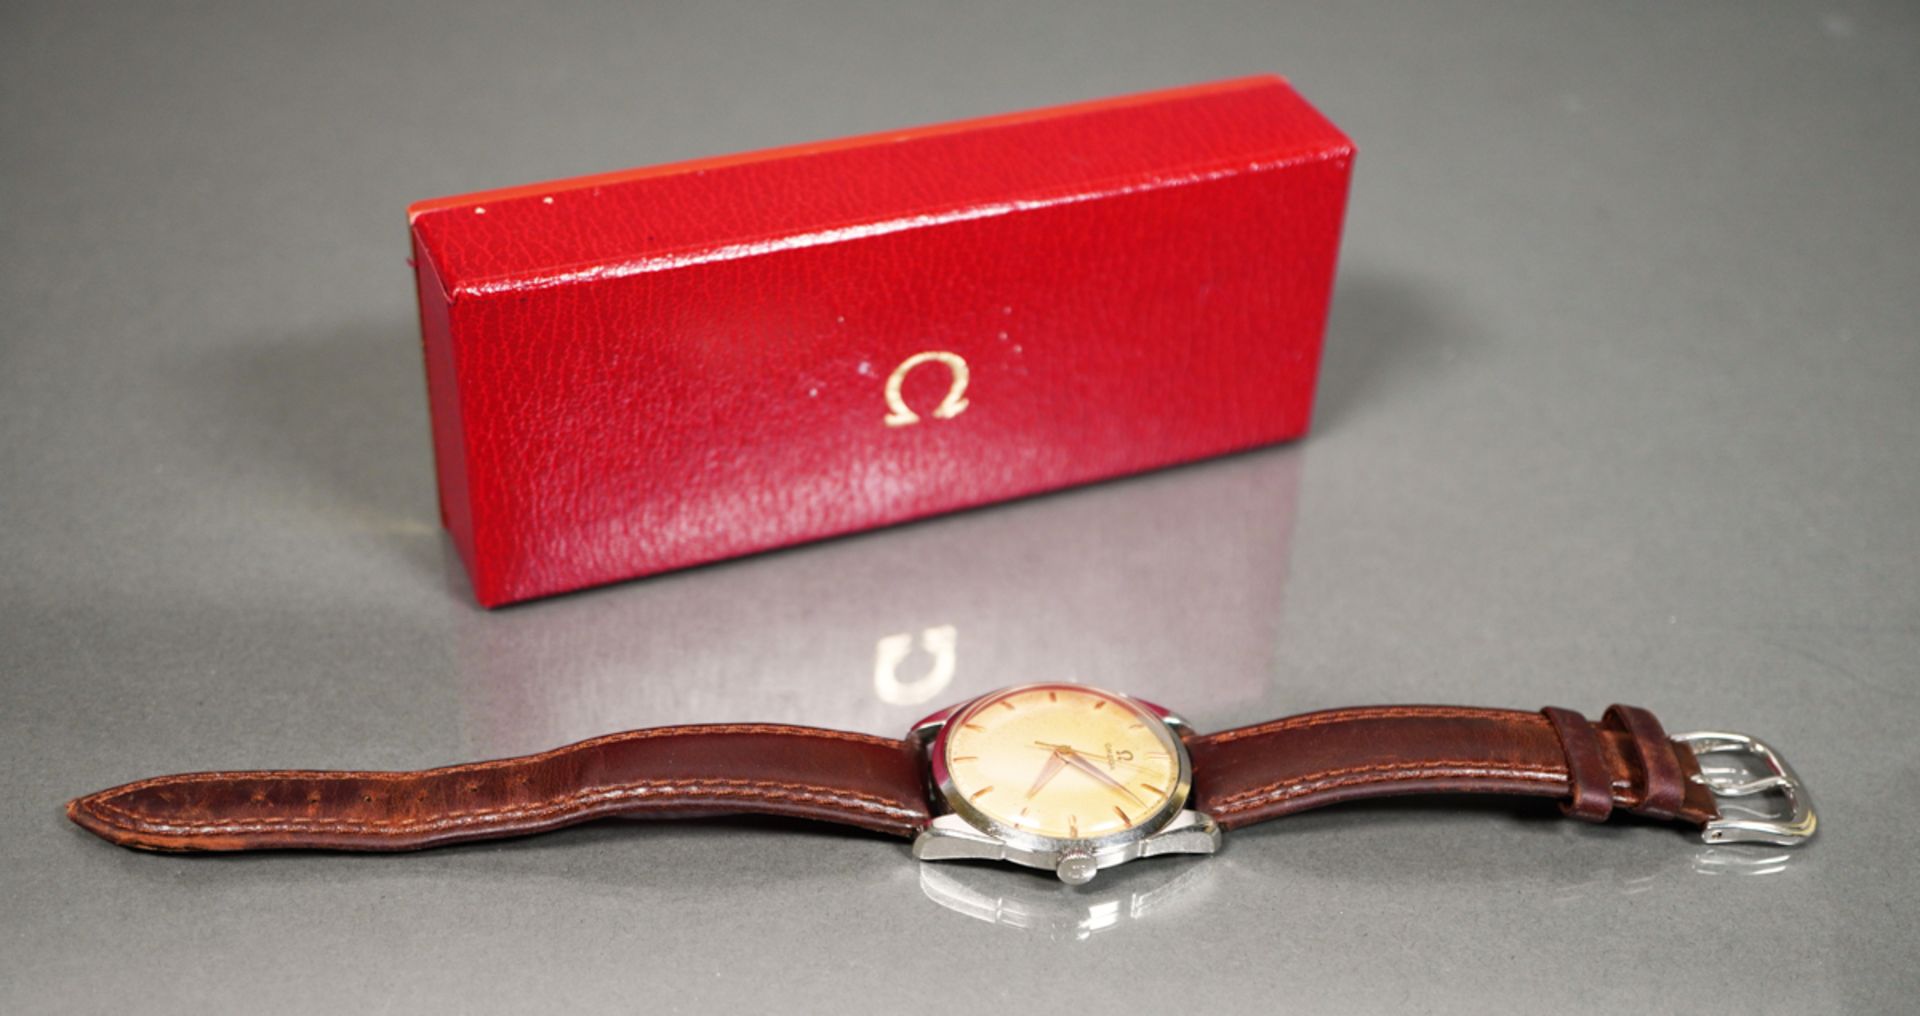 Omega Herrenarmbanduhr, ca. 1950er Jahre - Bild 2 aus 2